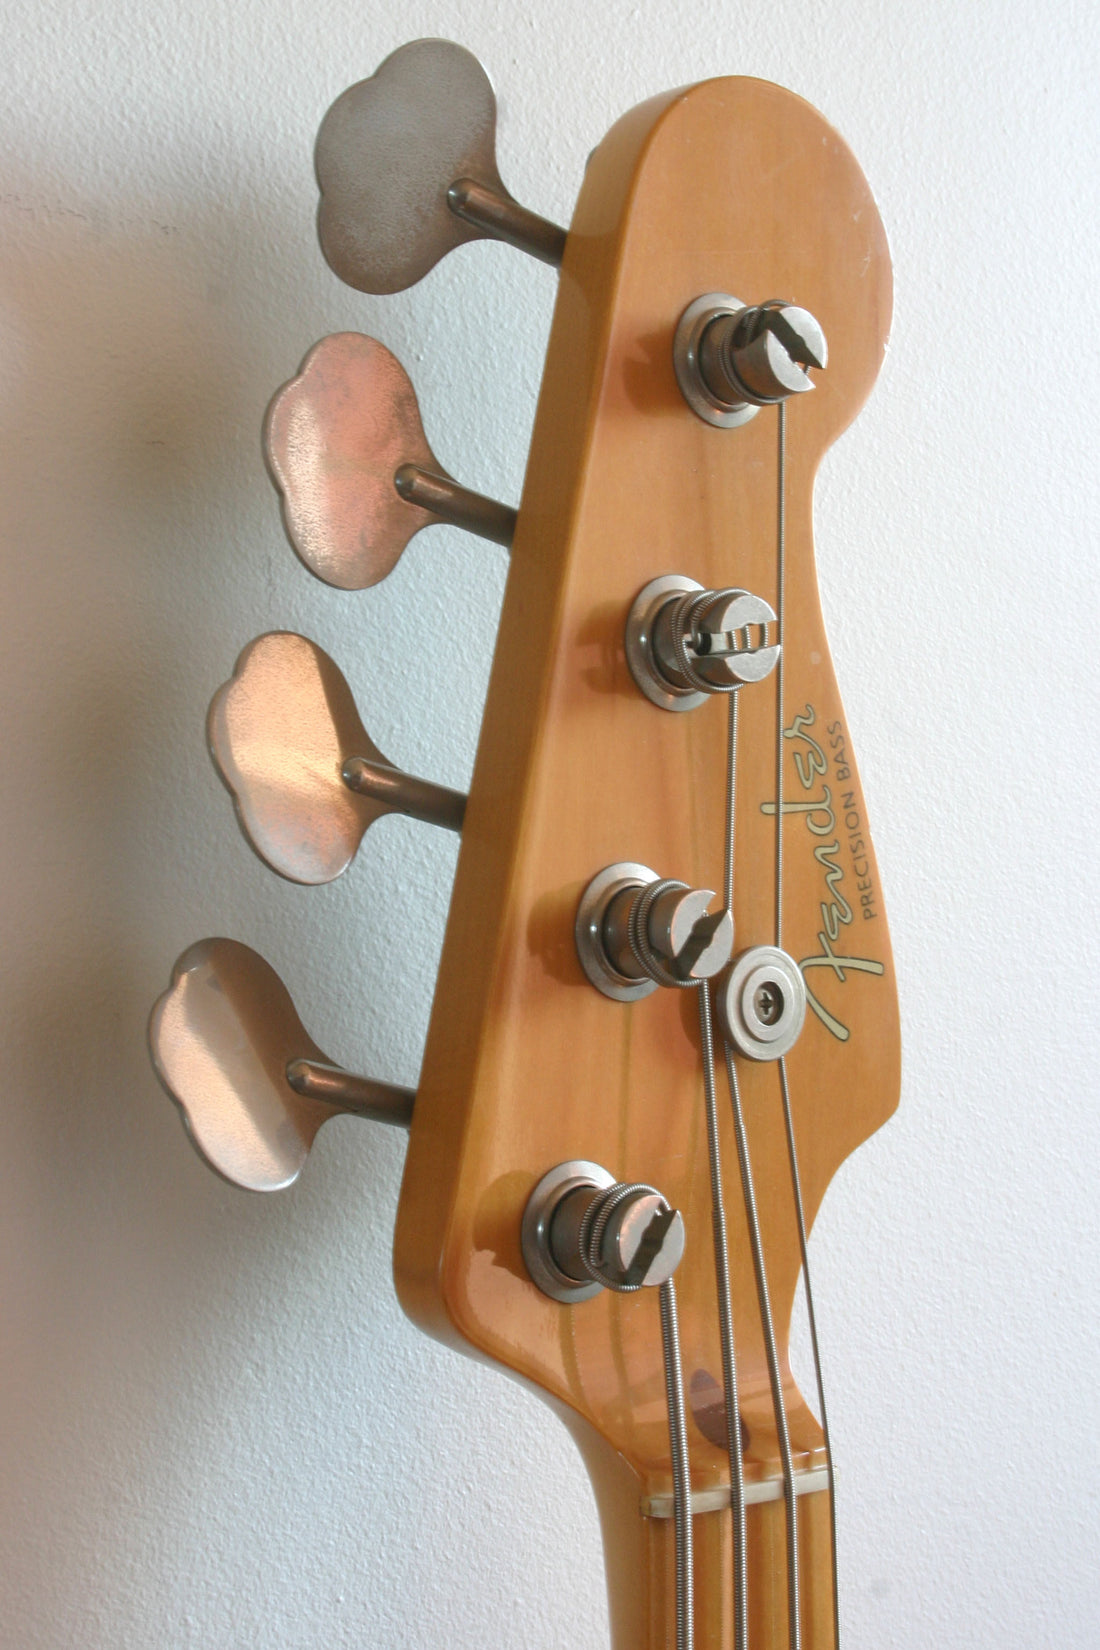 Used Fender Precision Bass '57 Reissue Black